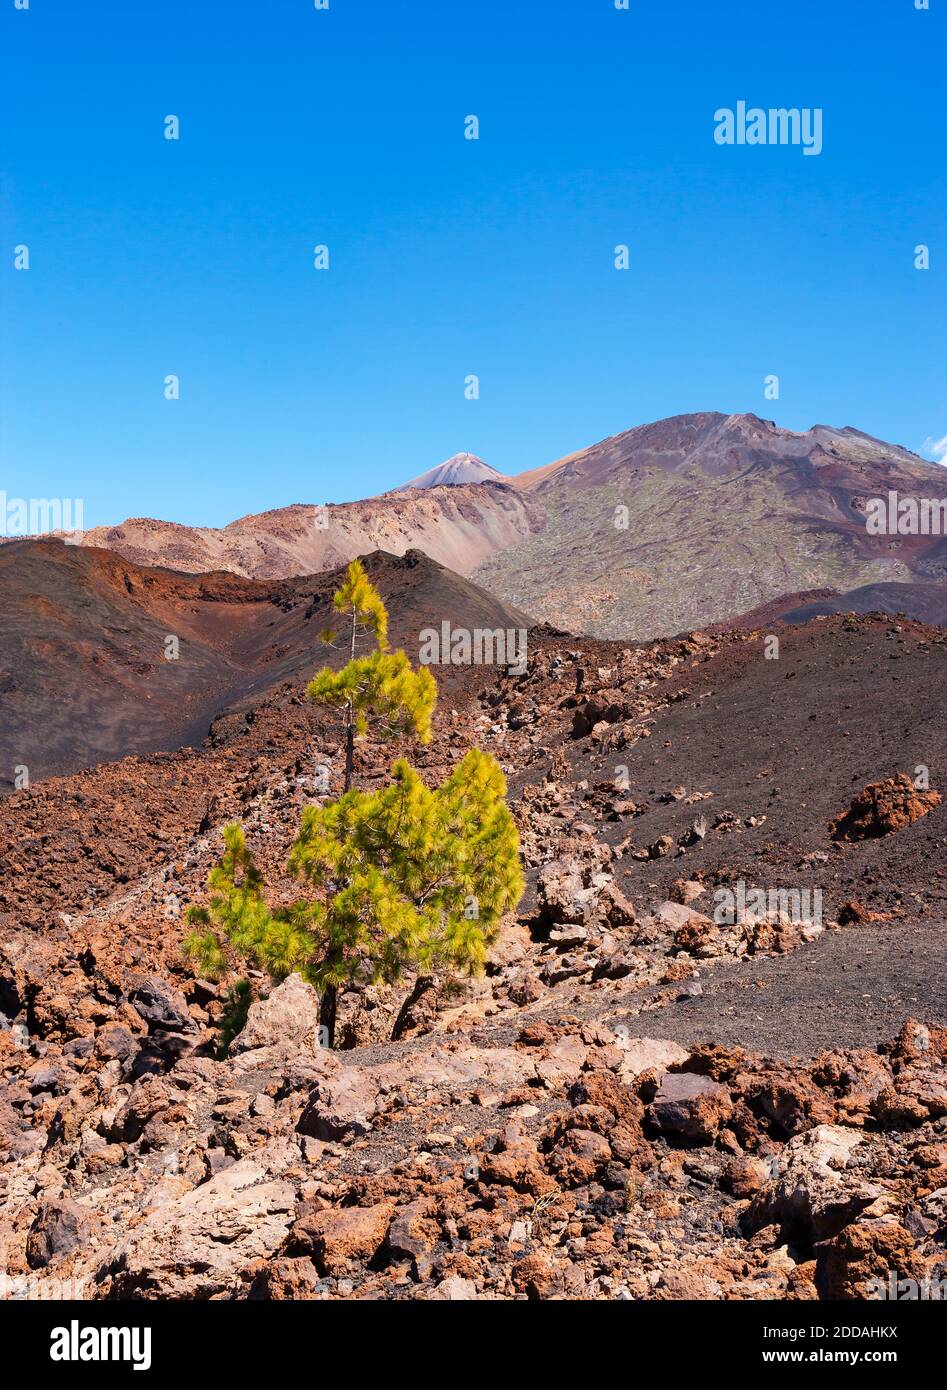 Single tree growing in brown volcanic terrain at Tenerife island Stock Photo